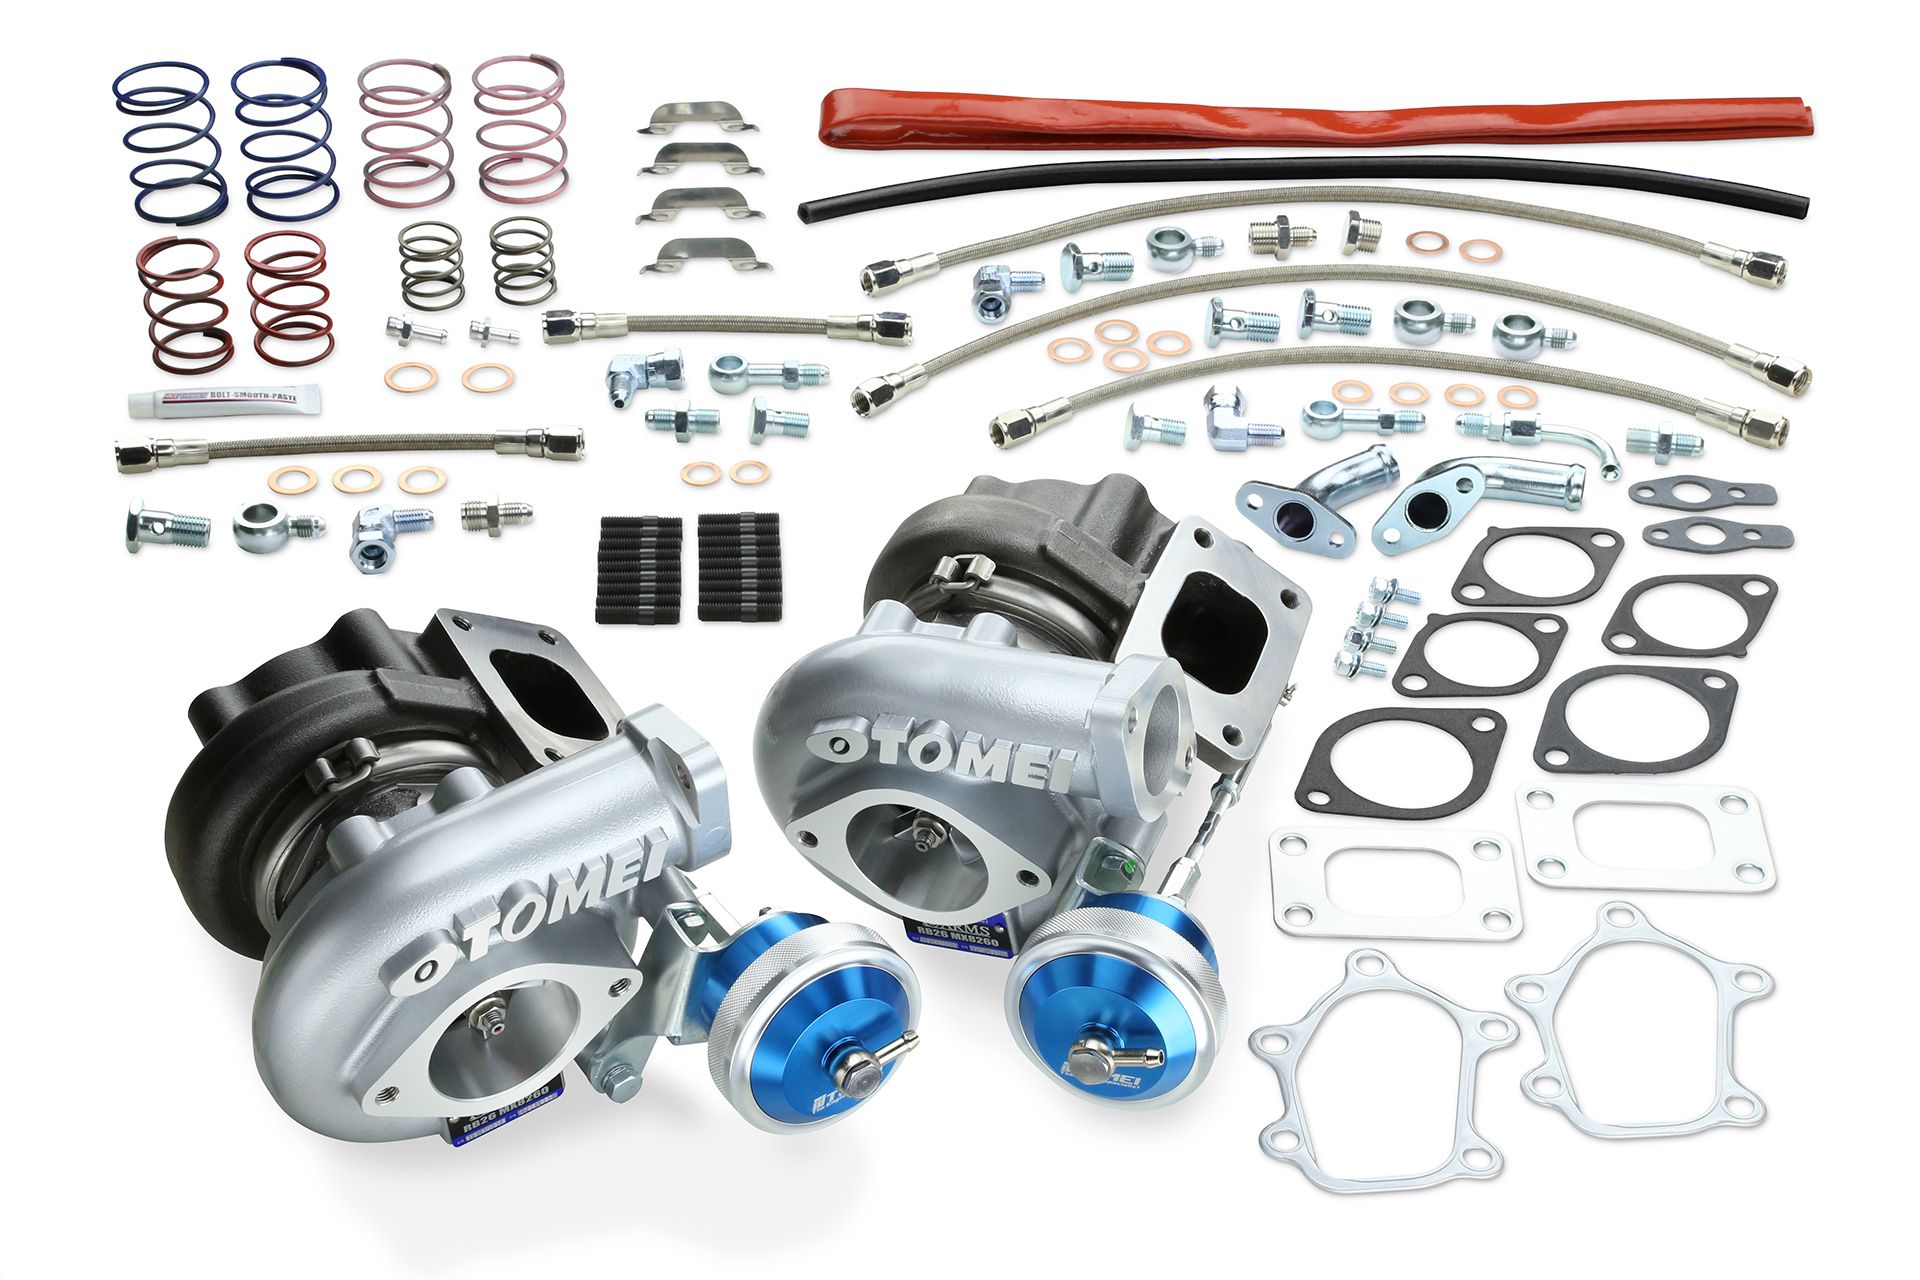 Tomei Turbocharger Kit Arms MX7655 RB26DETT - Nissan Skyline GT-R R32 R33 R34